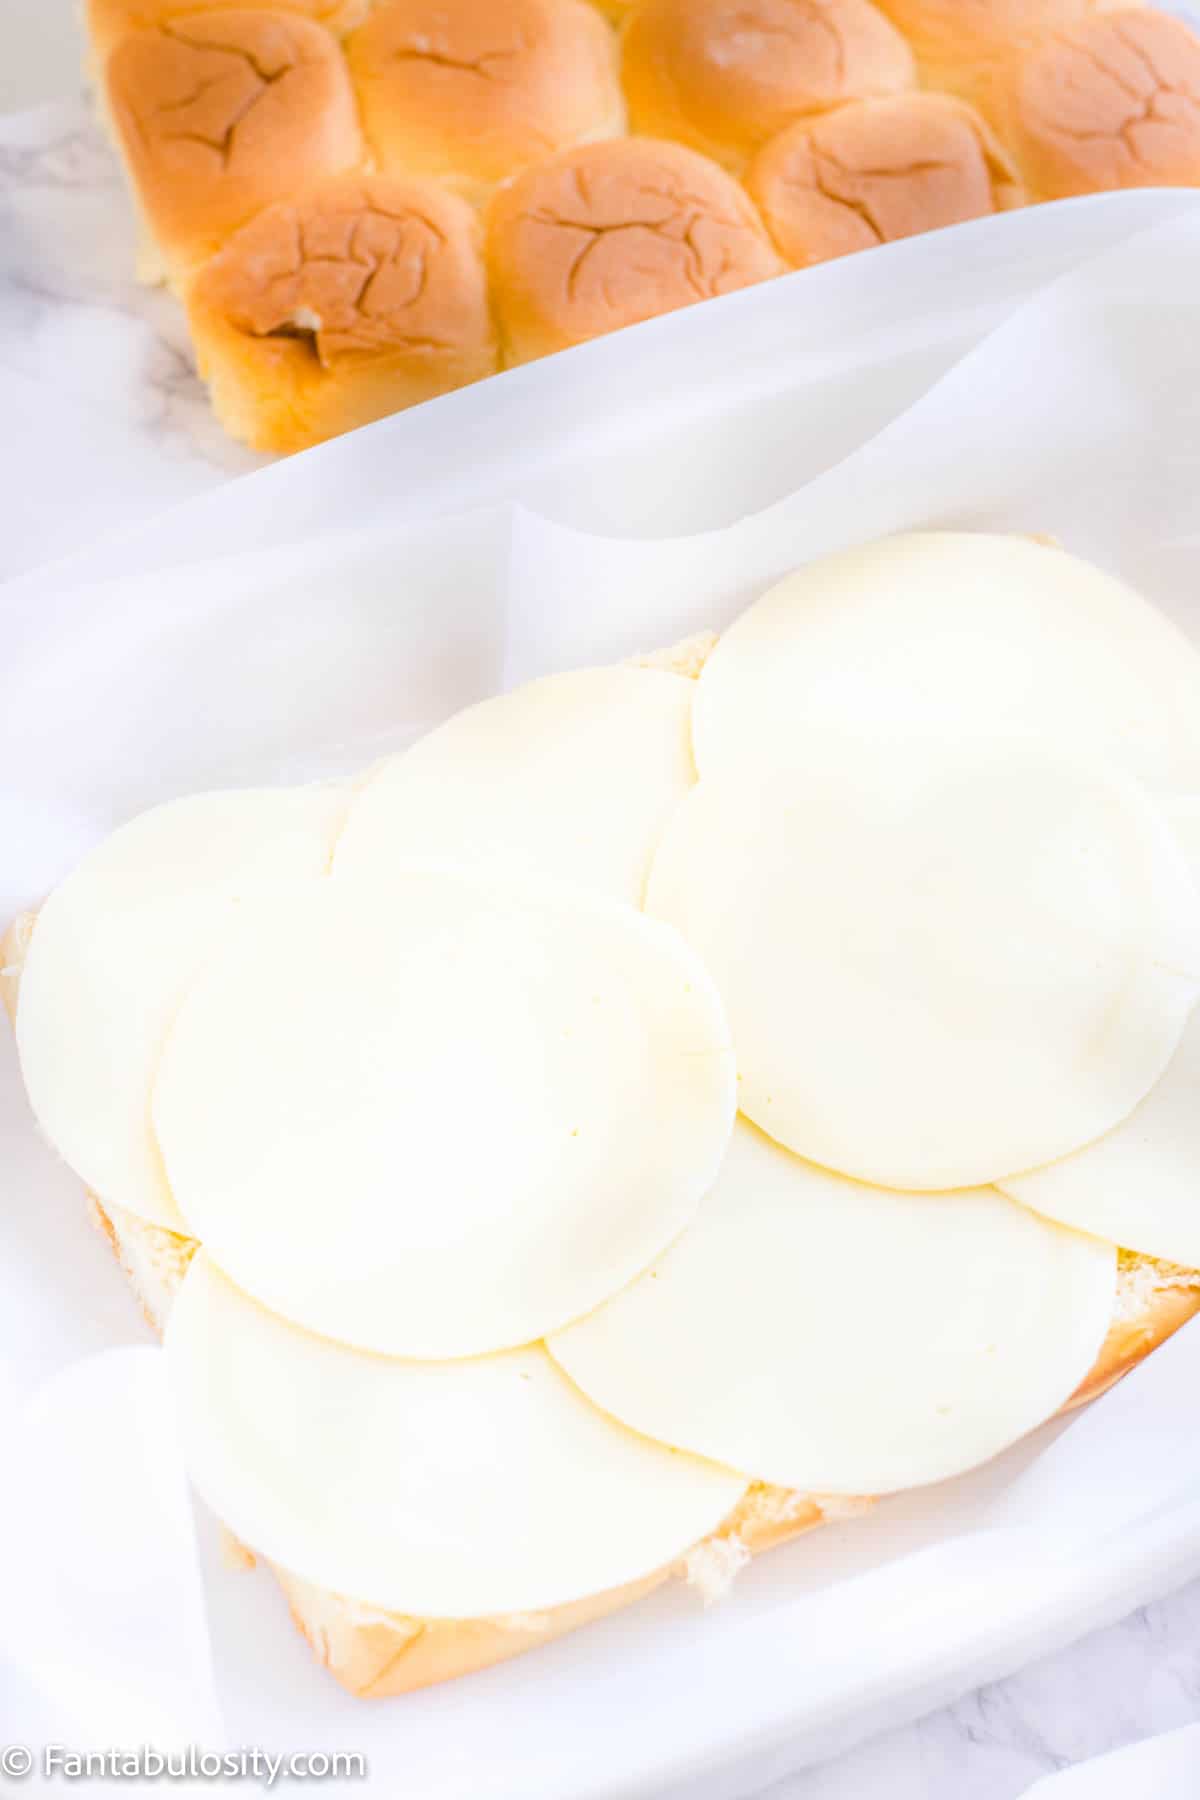 provolone cheese layered on hawaiian buns